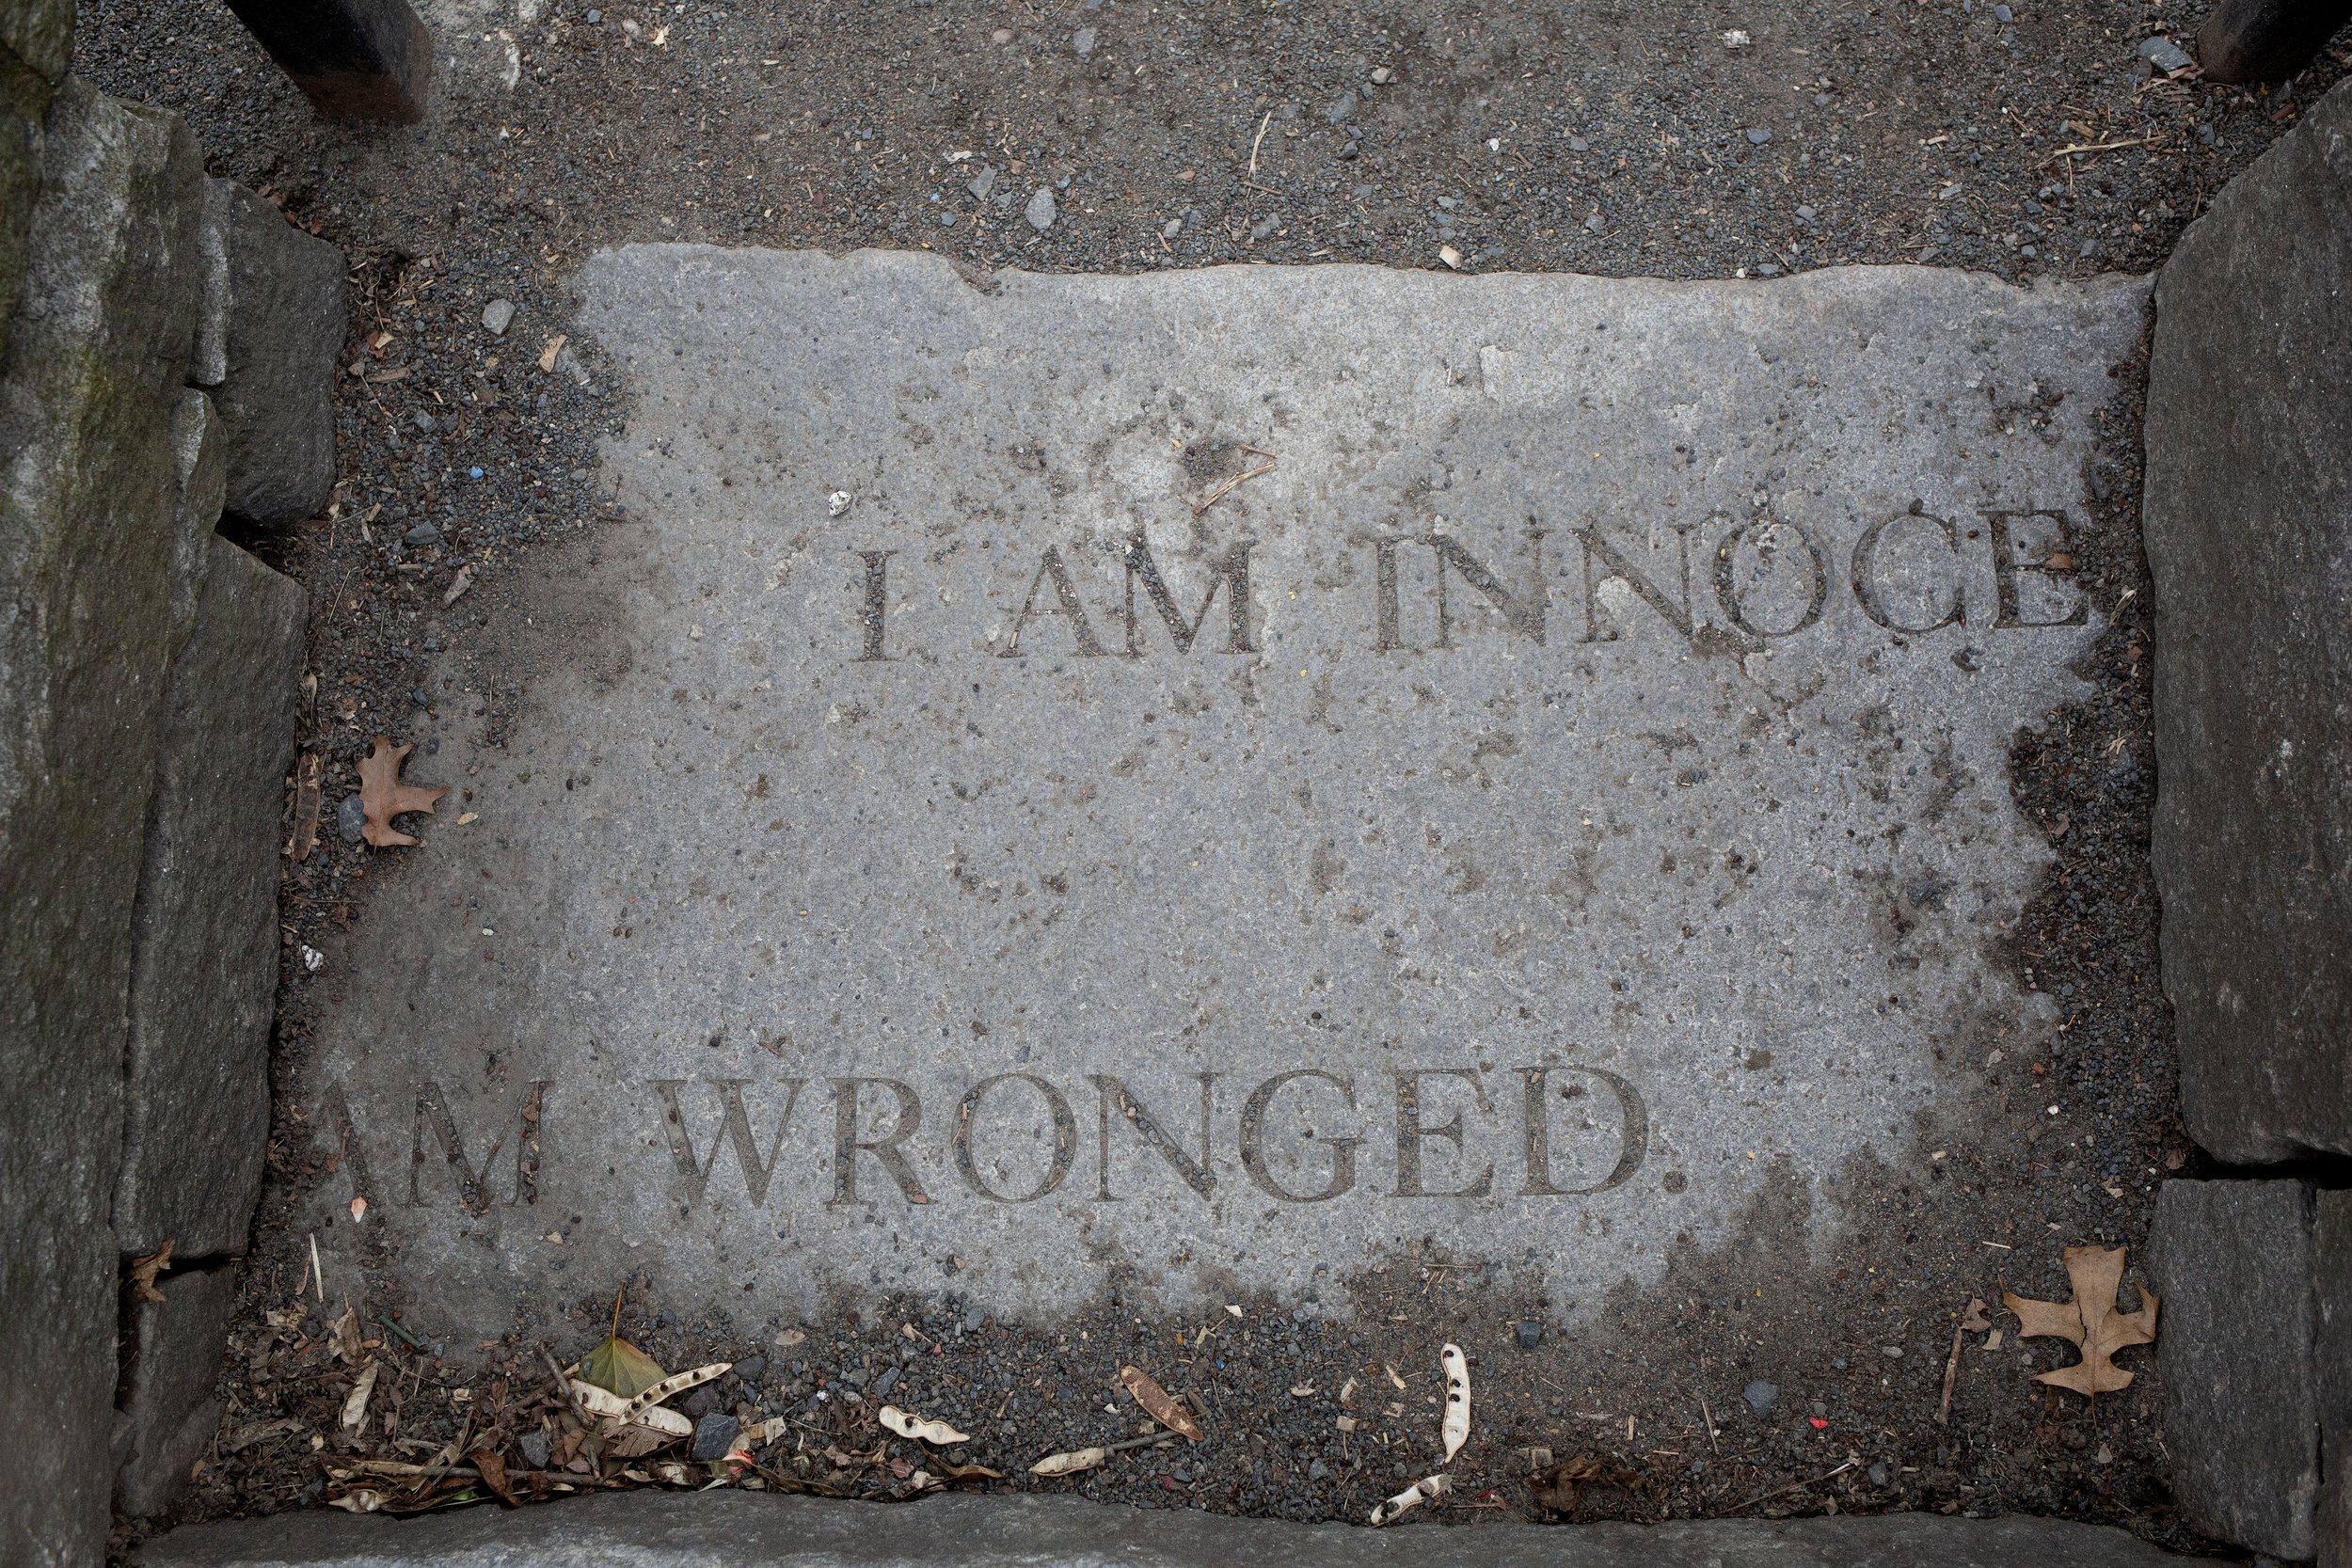 I am Innocent. I am Wronged. Salem, Massachusetts. 2019.